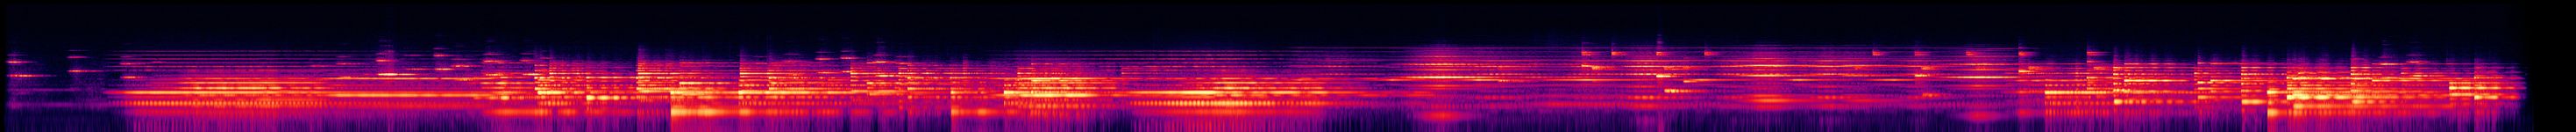 The Delian Mode - Spectrogram.jpg